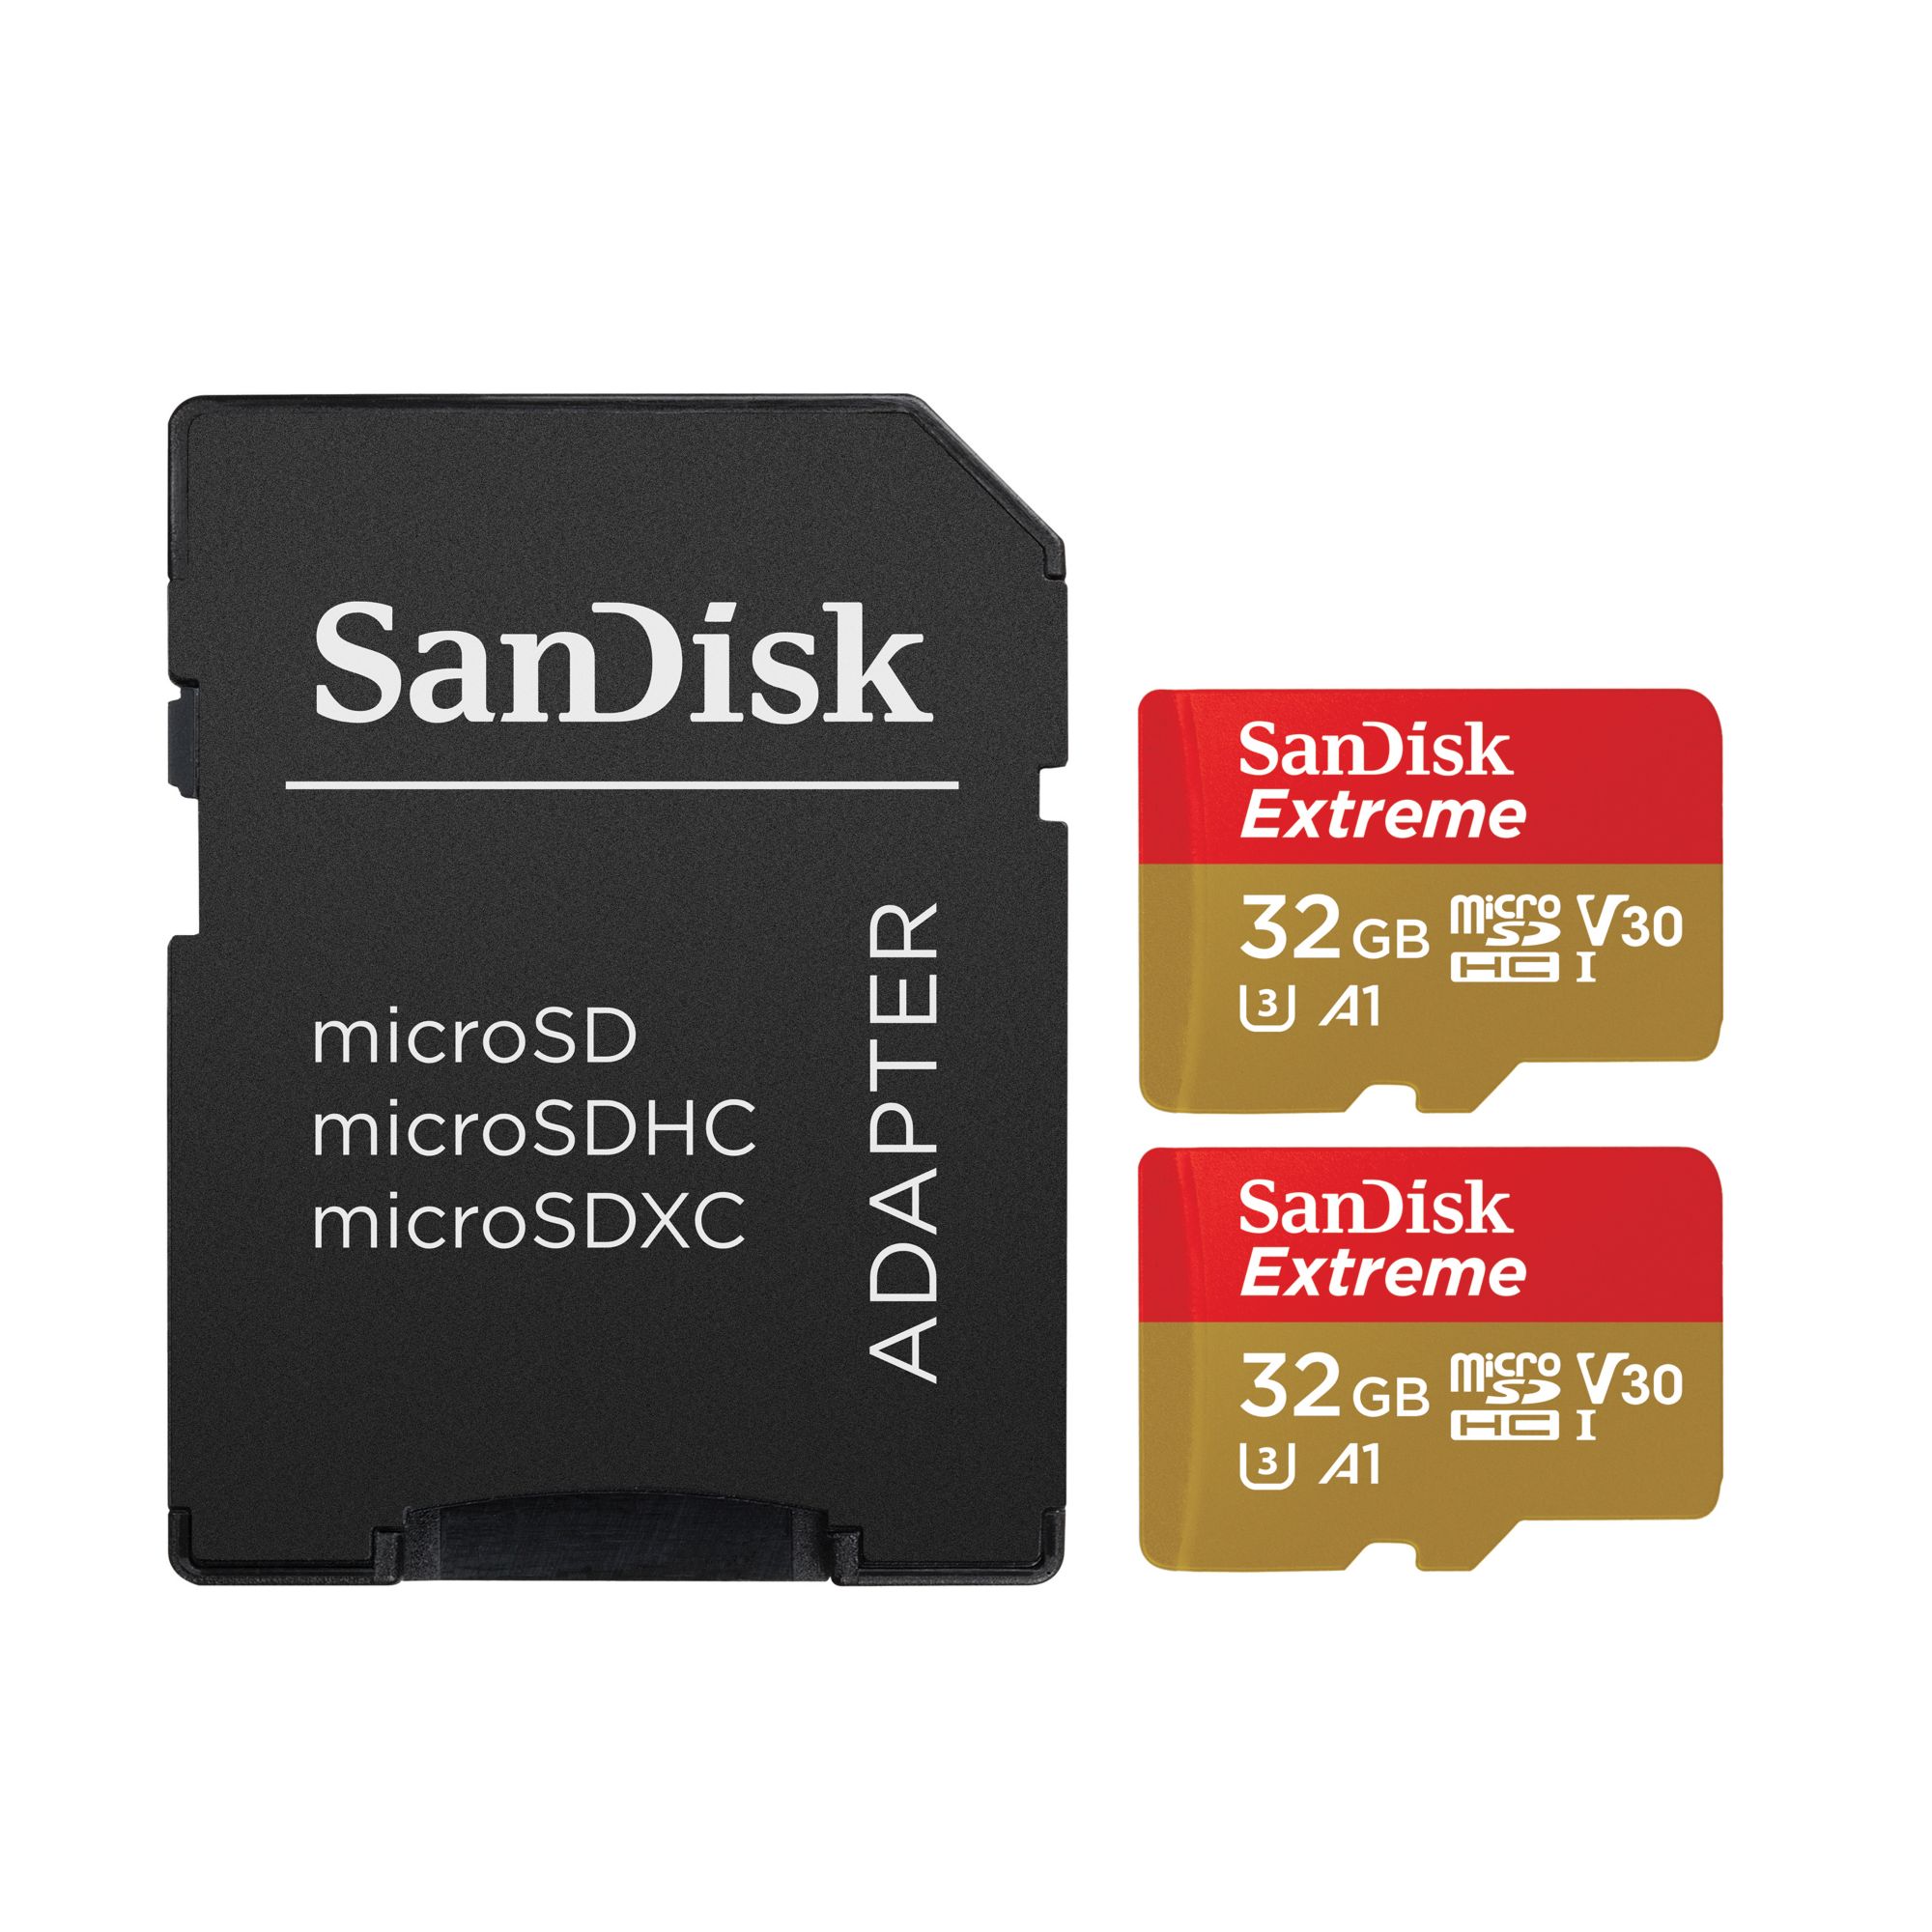 SanDisk 32GB Extreme UHS-I microSDHC Memory Card, 2 pk.